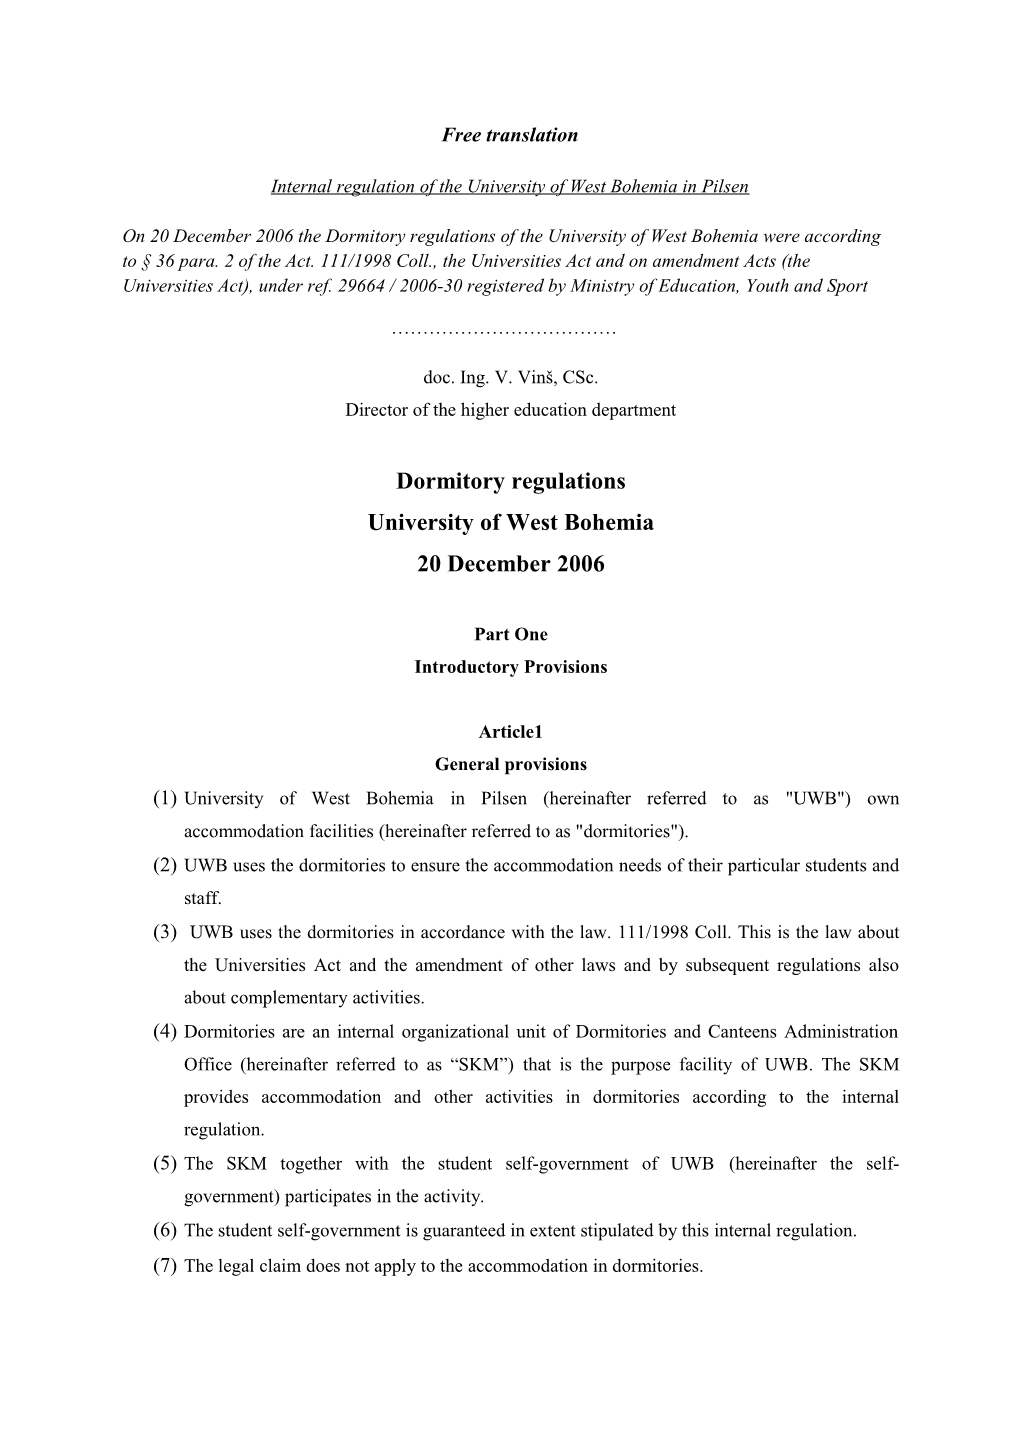 Internal Regulation of the University of West Bohemia in Pilsen